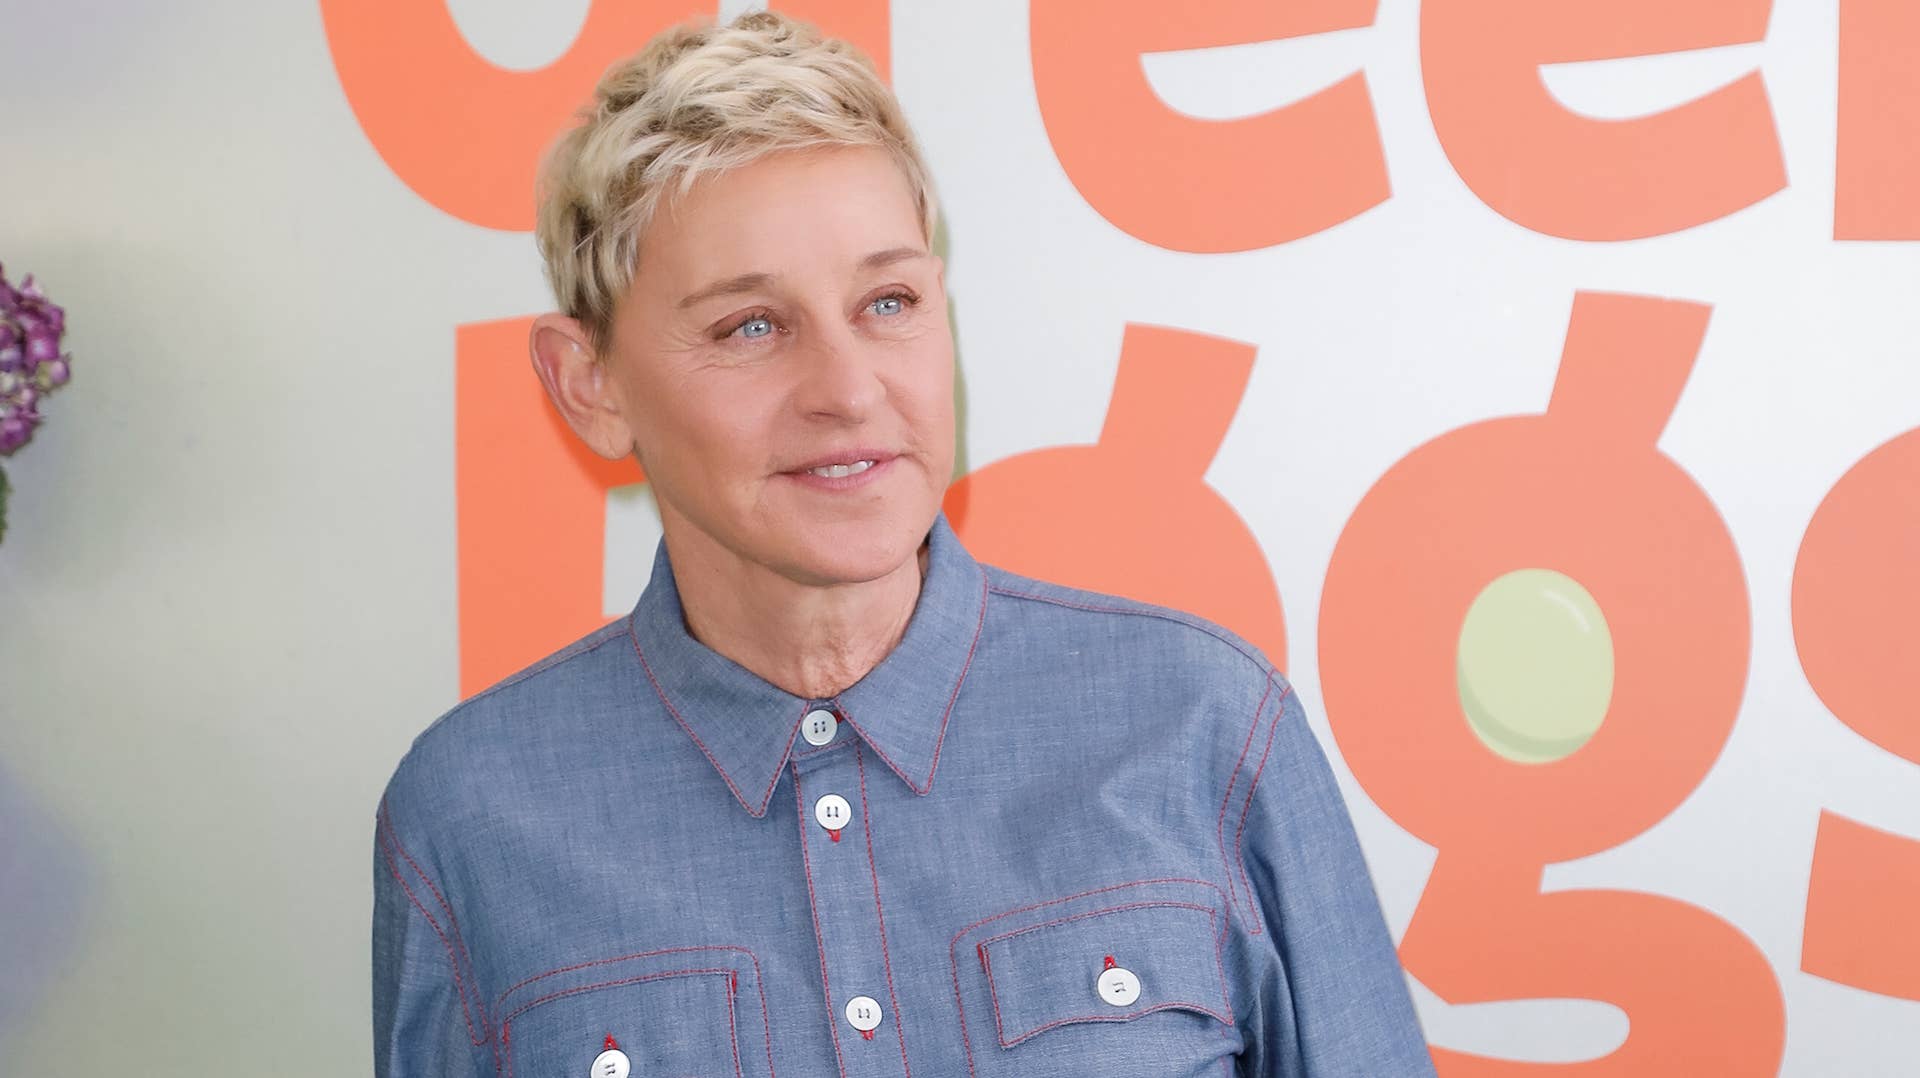 Ellen DeGeneres attends the premiere of Netflix's "Green Eggs And Ham"